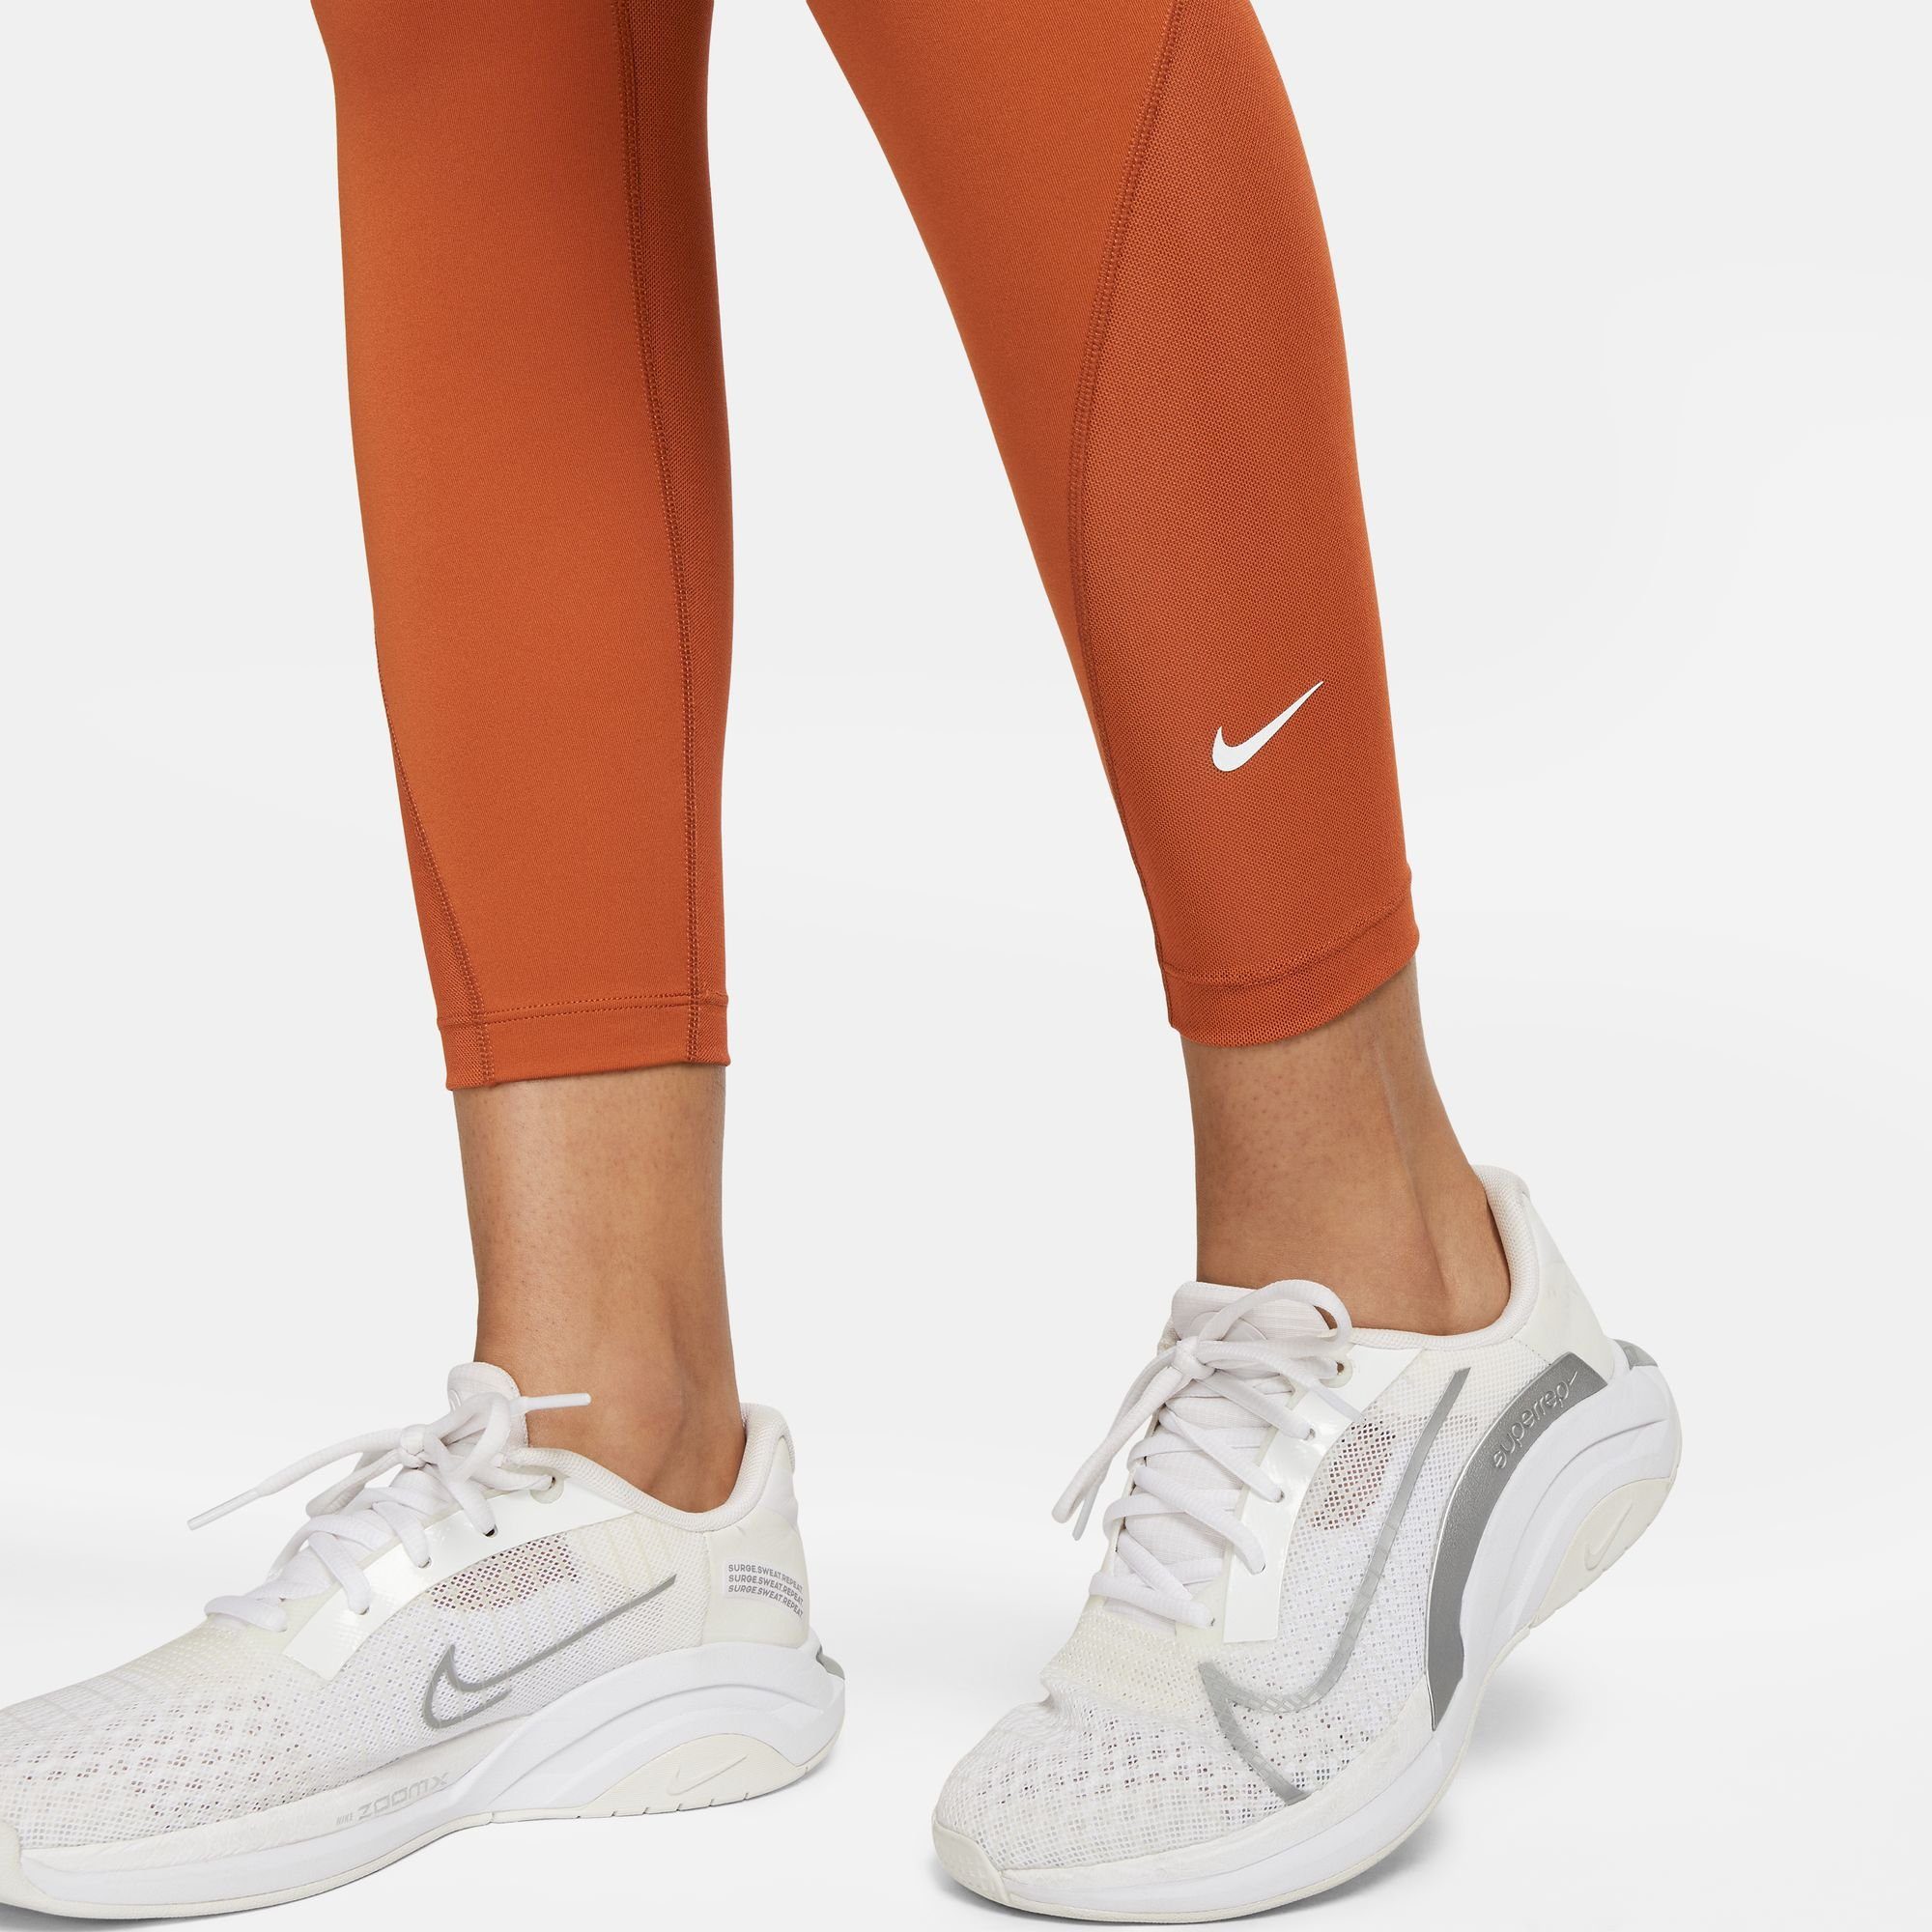 ONE HIGH-WAISTED braun Trainingstights LEGGINGS WOMEN'S Nike /